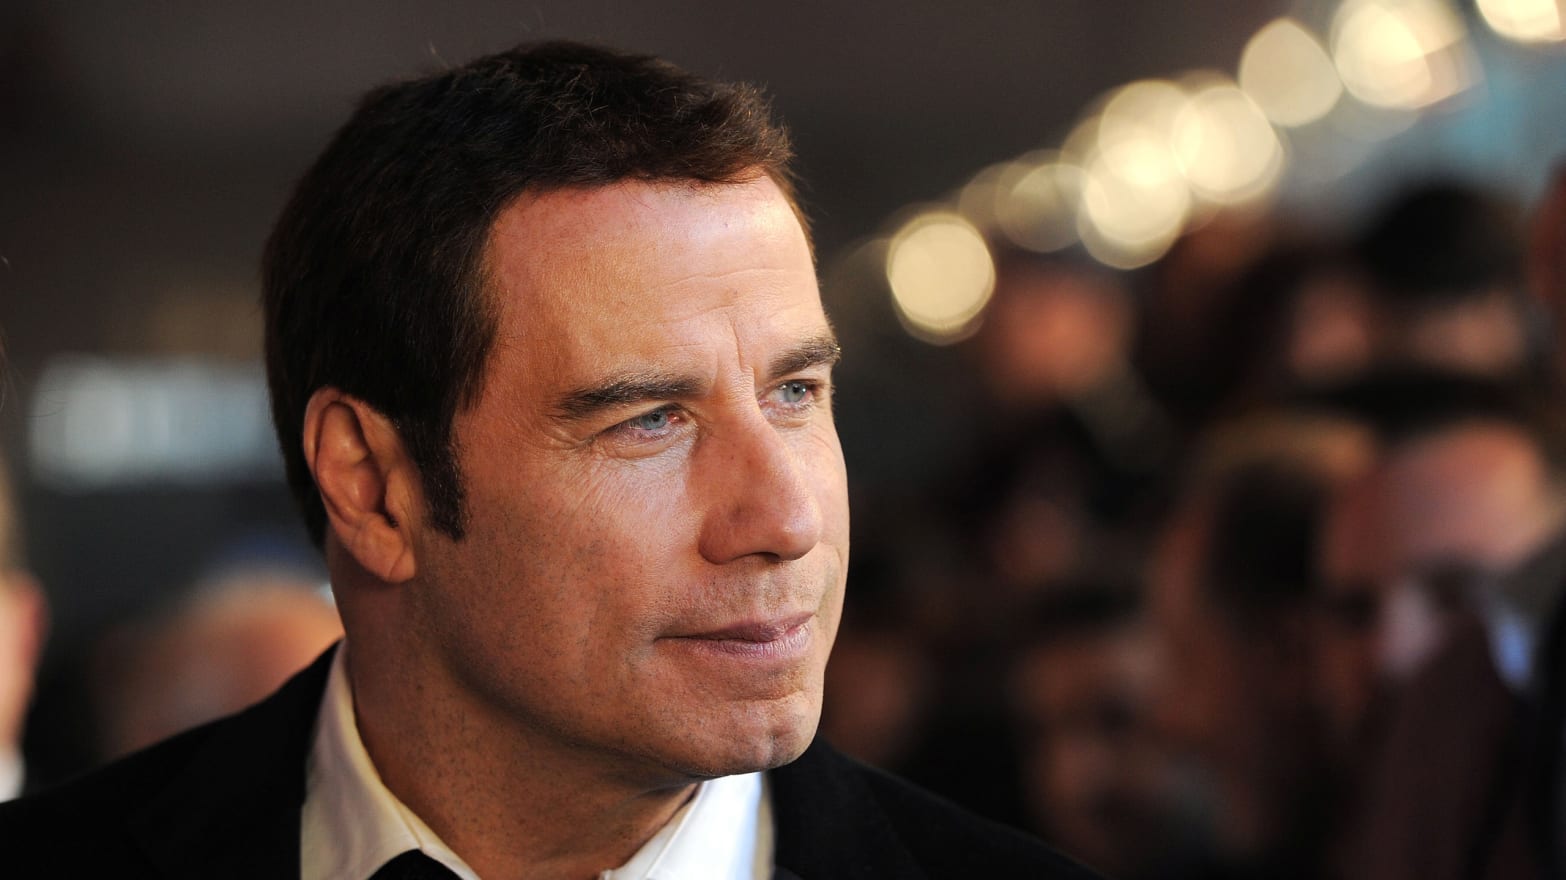 John Travolta on Those Allegations, ‘Battlefield Earth ...
